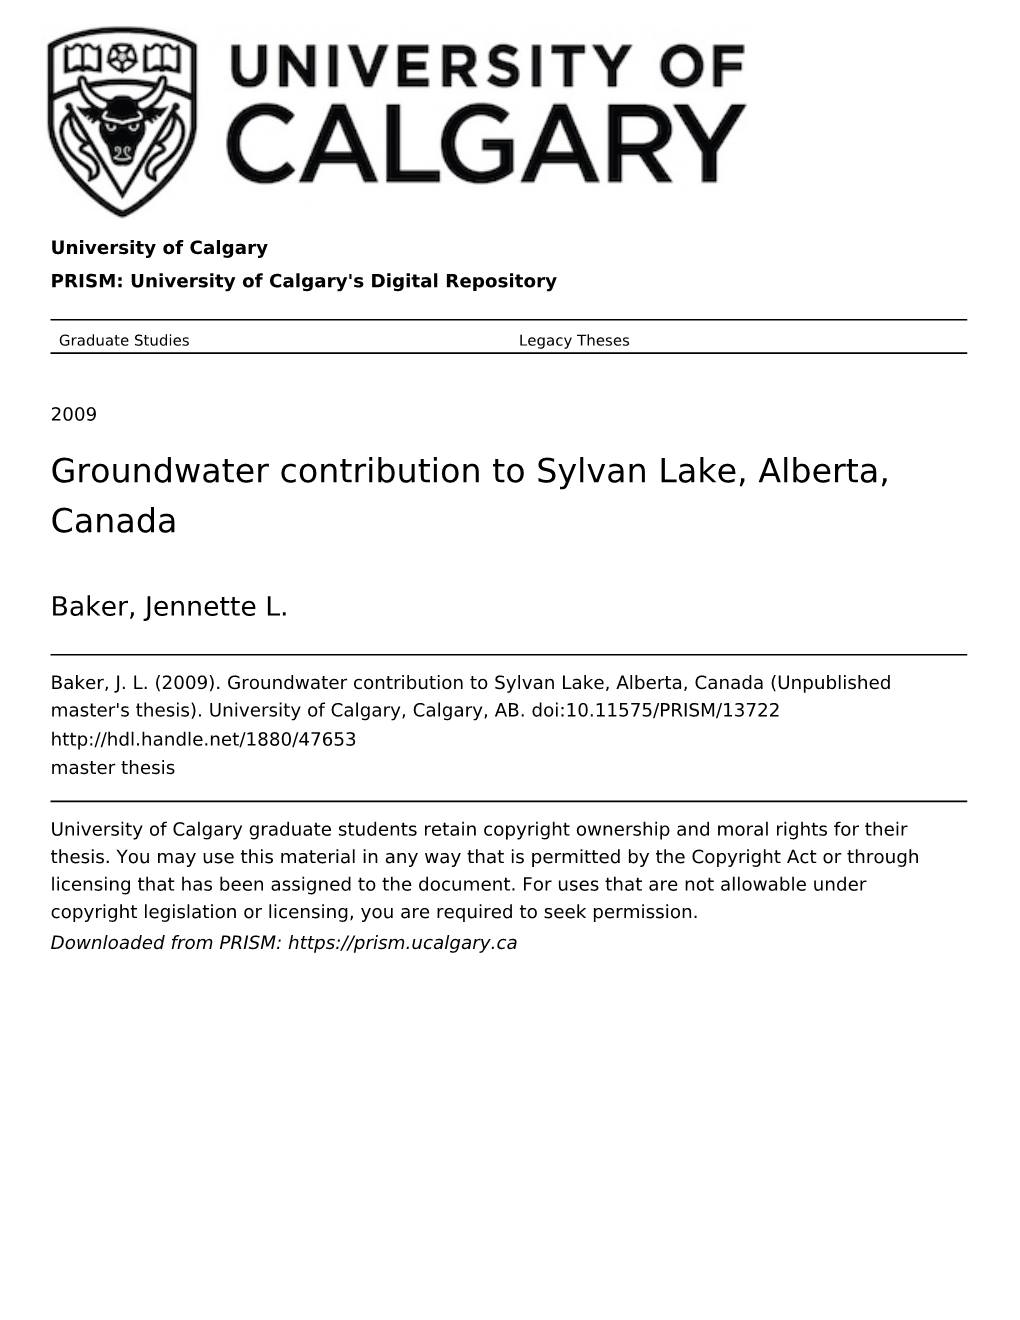 Groundwater Contribution to Sylvan Lake, Alberta, Canada